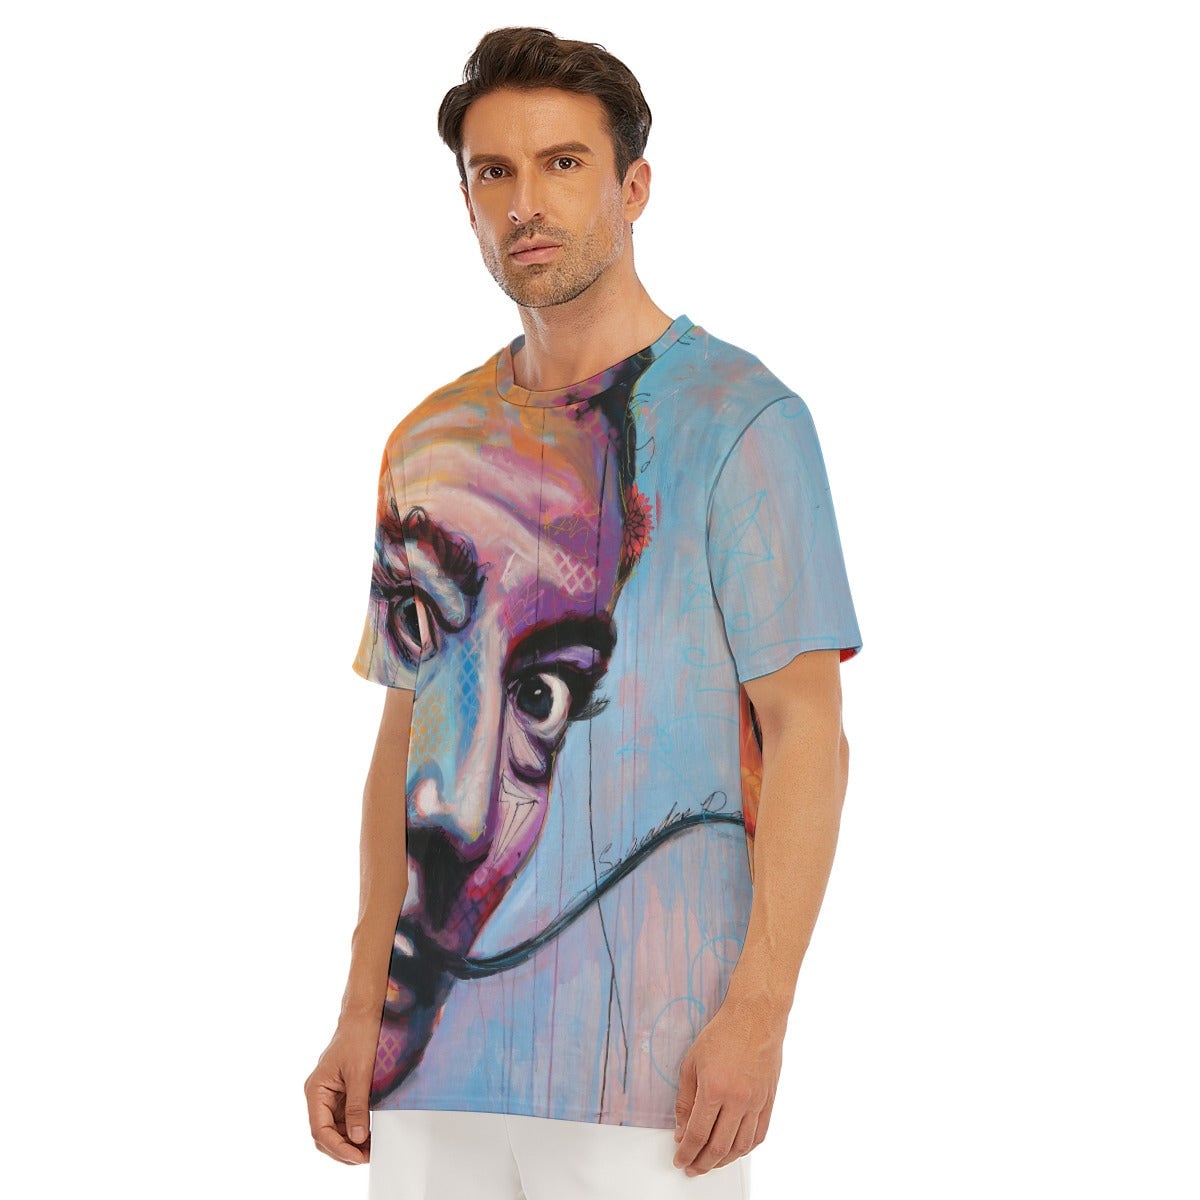 Iconic Pop Art Surrealism Collage Salvador Dali T-Shirt